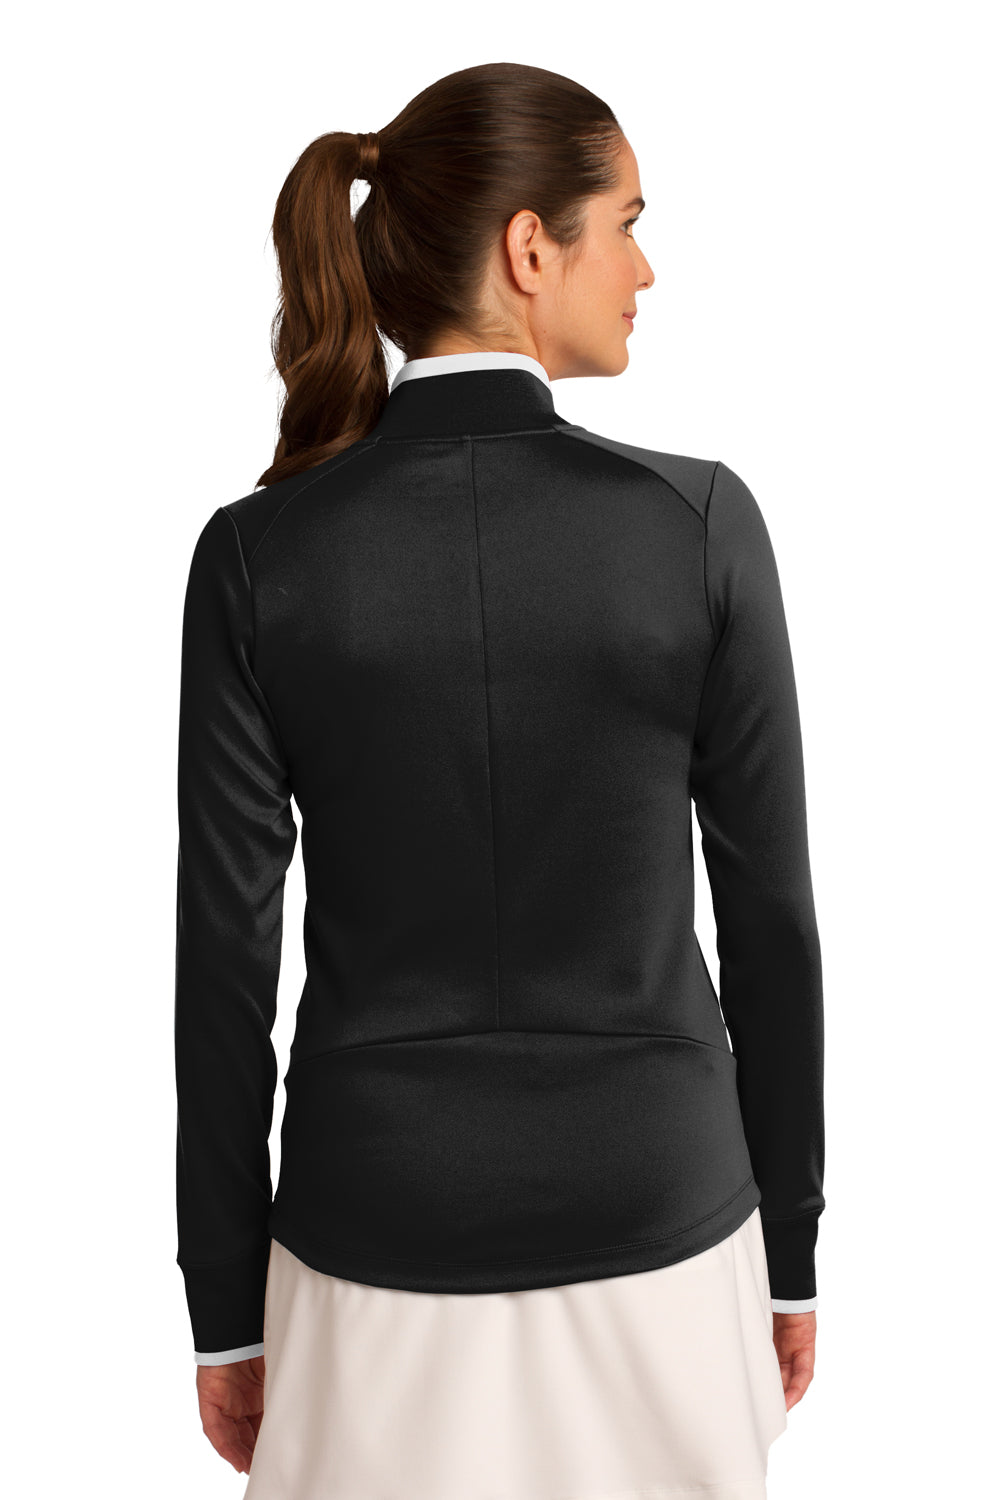 Nike 578674 Womens Dri-Fit Moisture Wicking 1/4 Zip Sweatshirt Black/White Model Back